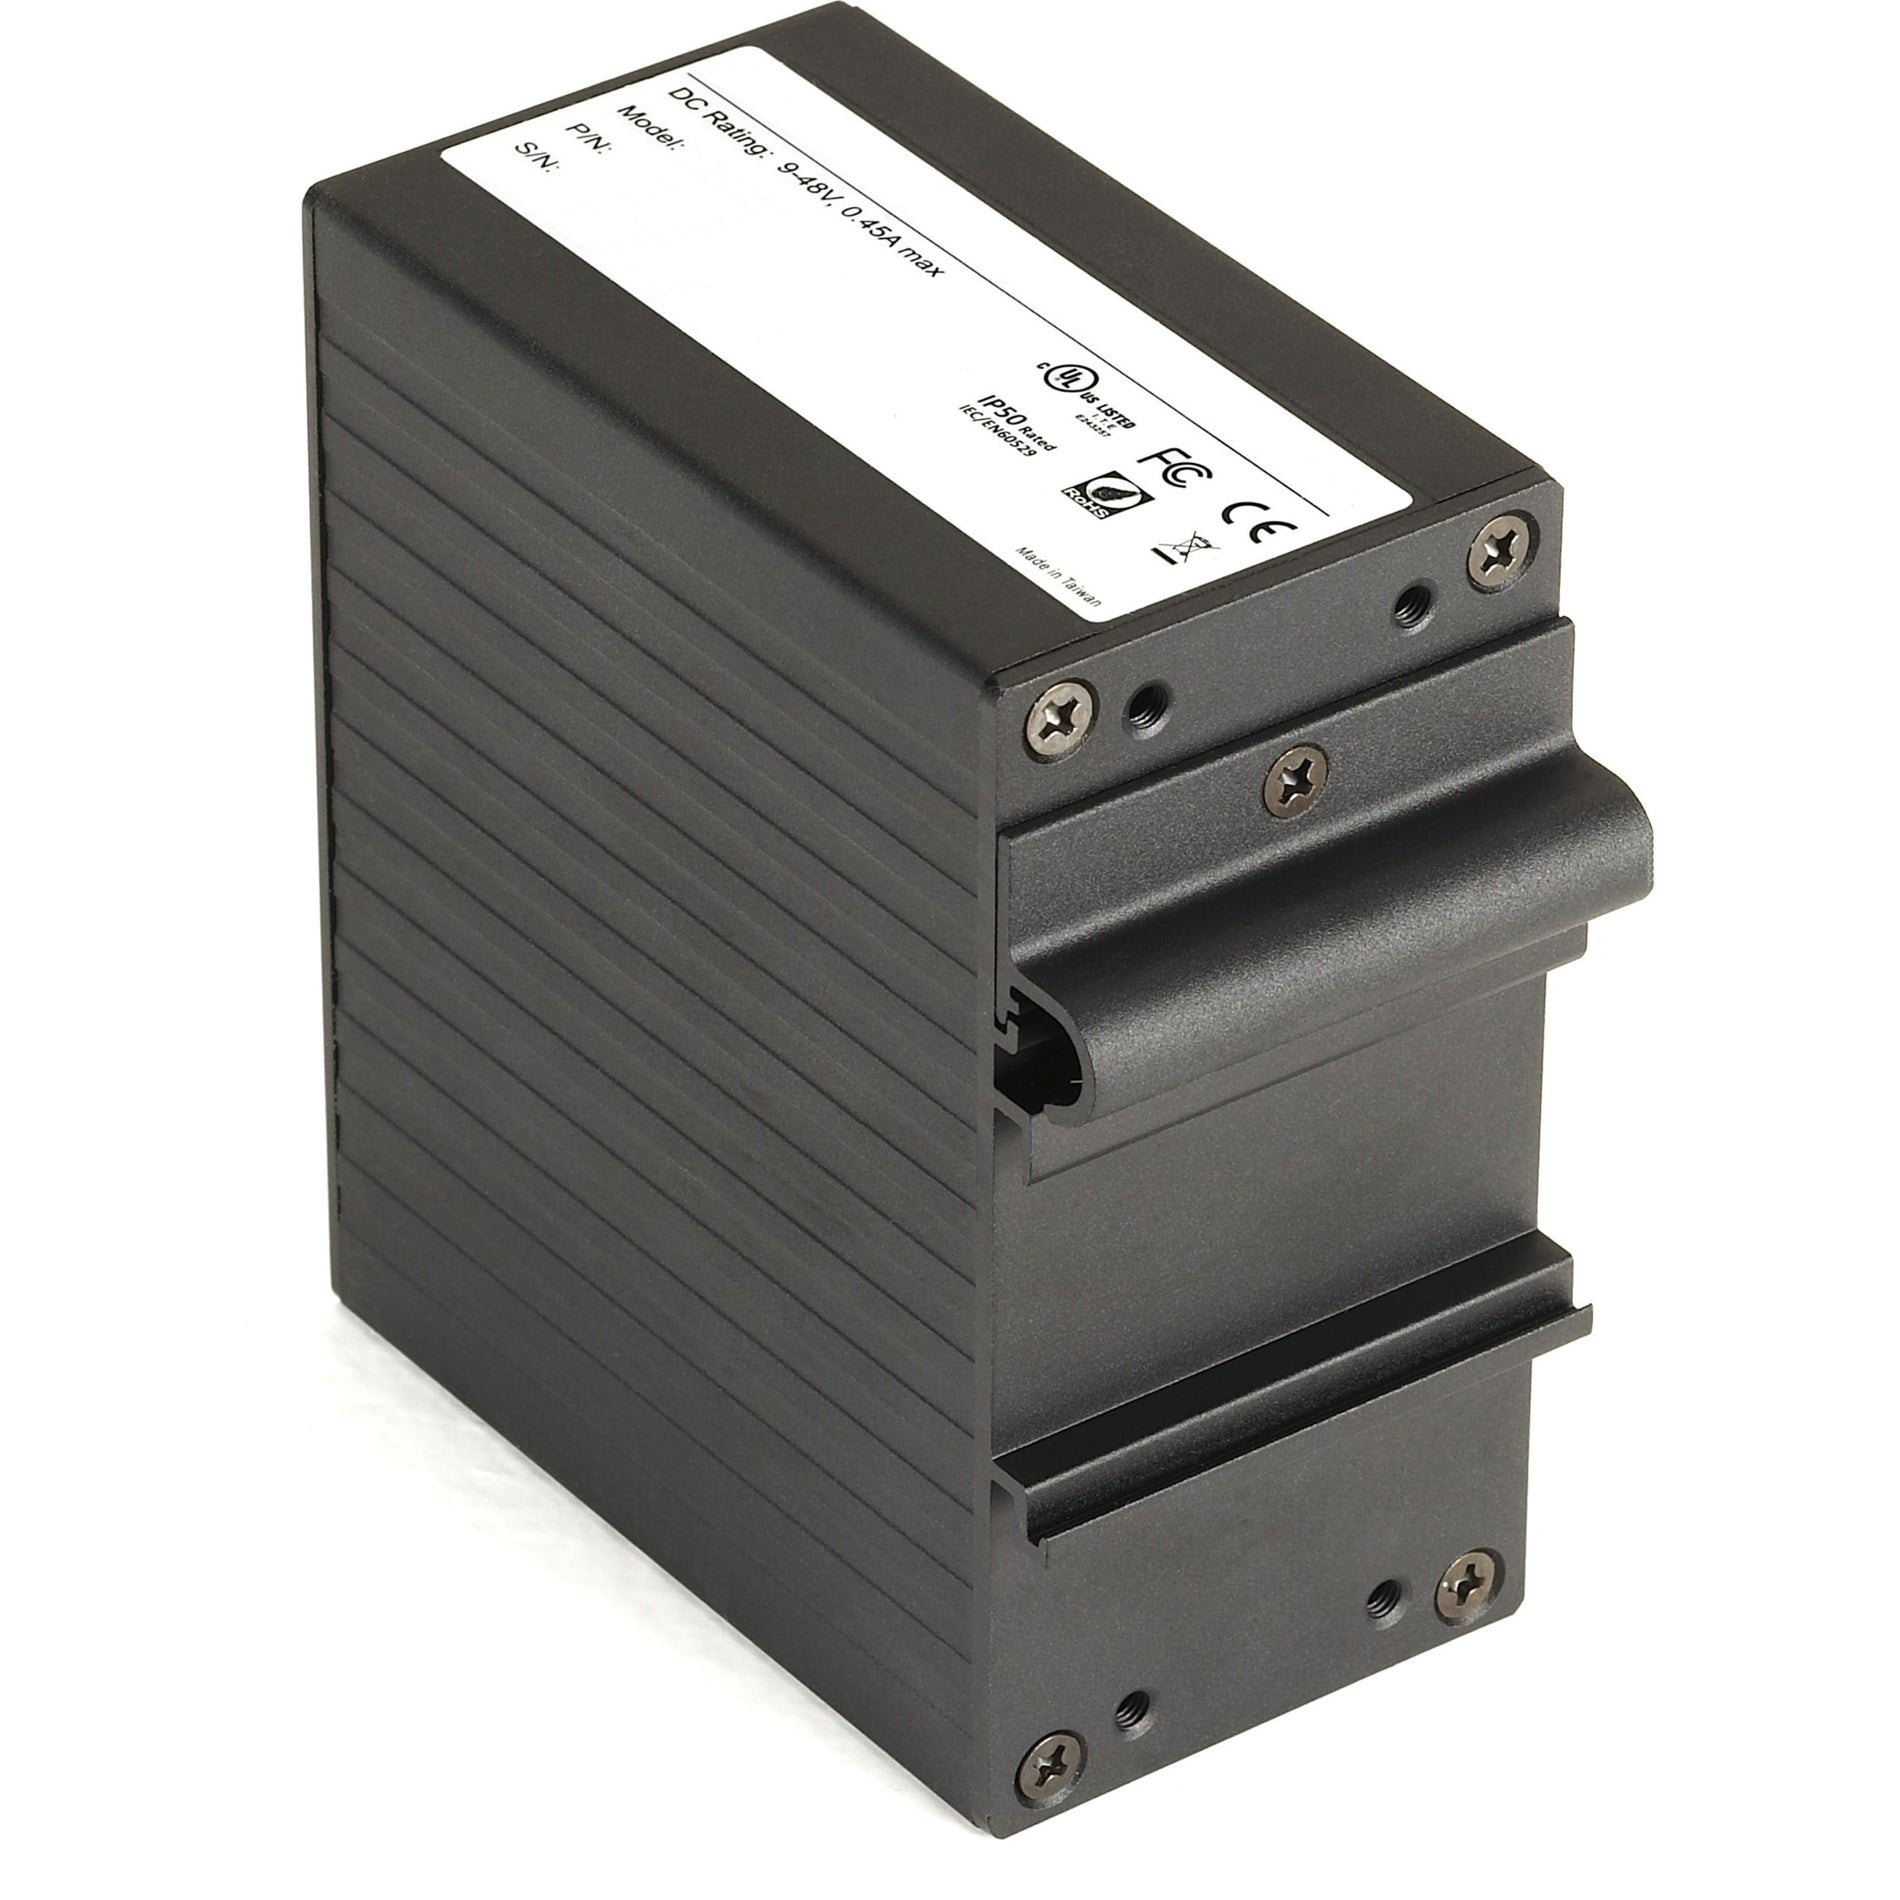 Black Box LGH008A HRD Switch - (8) 10/100/1000Mbps RJ45, 5-Year Warranty, TAA Compliant, Gigabit Ethernet